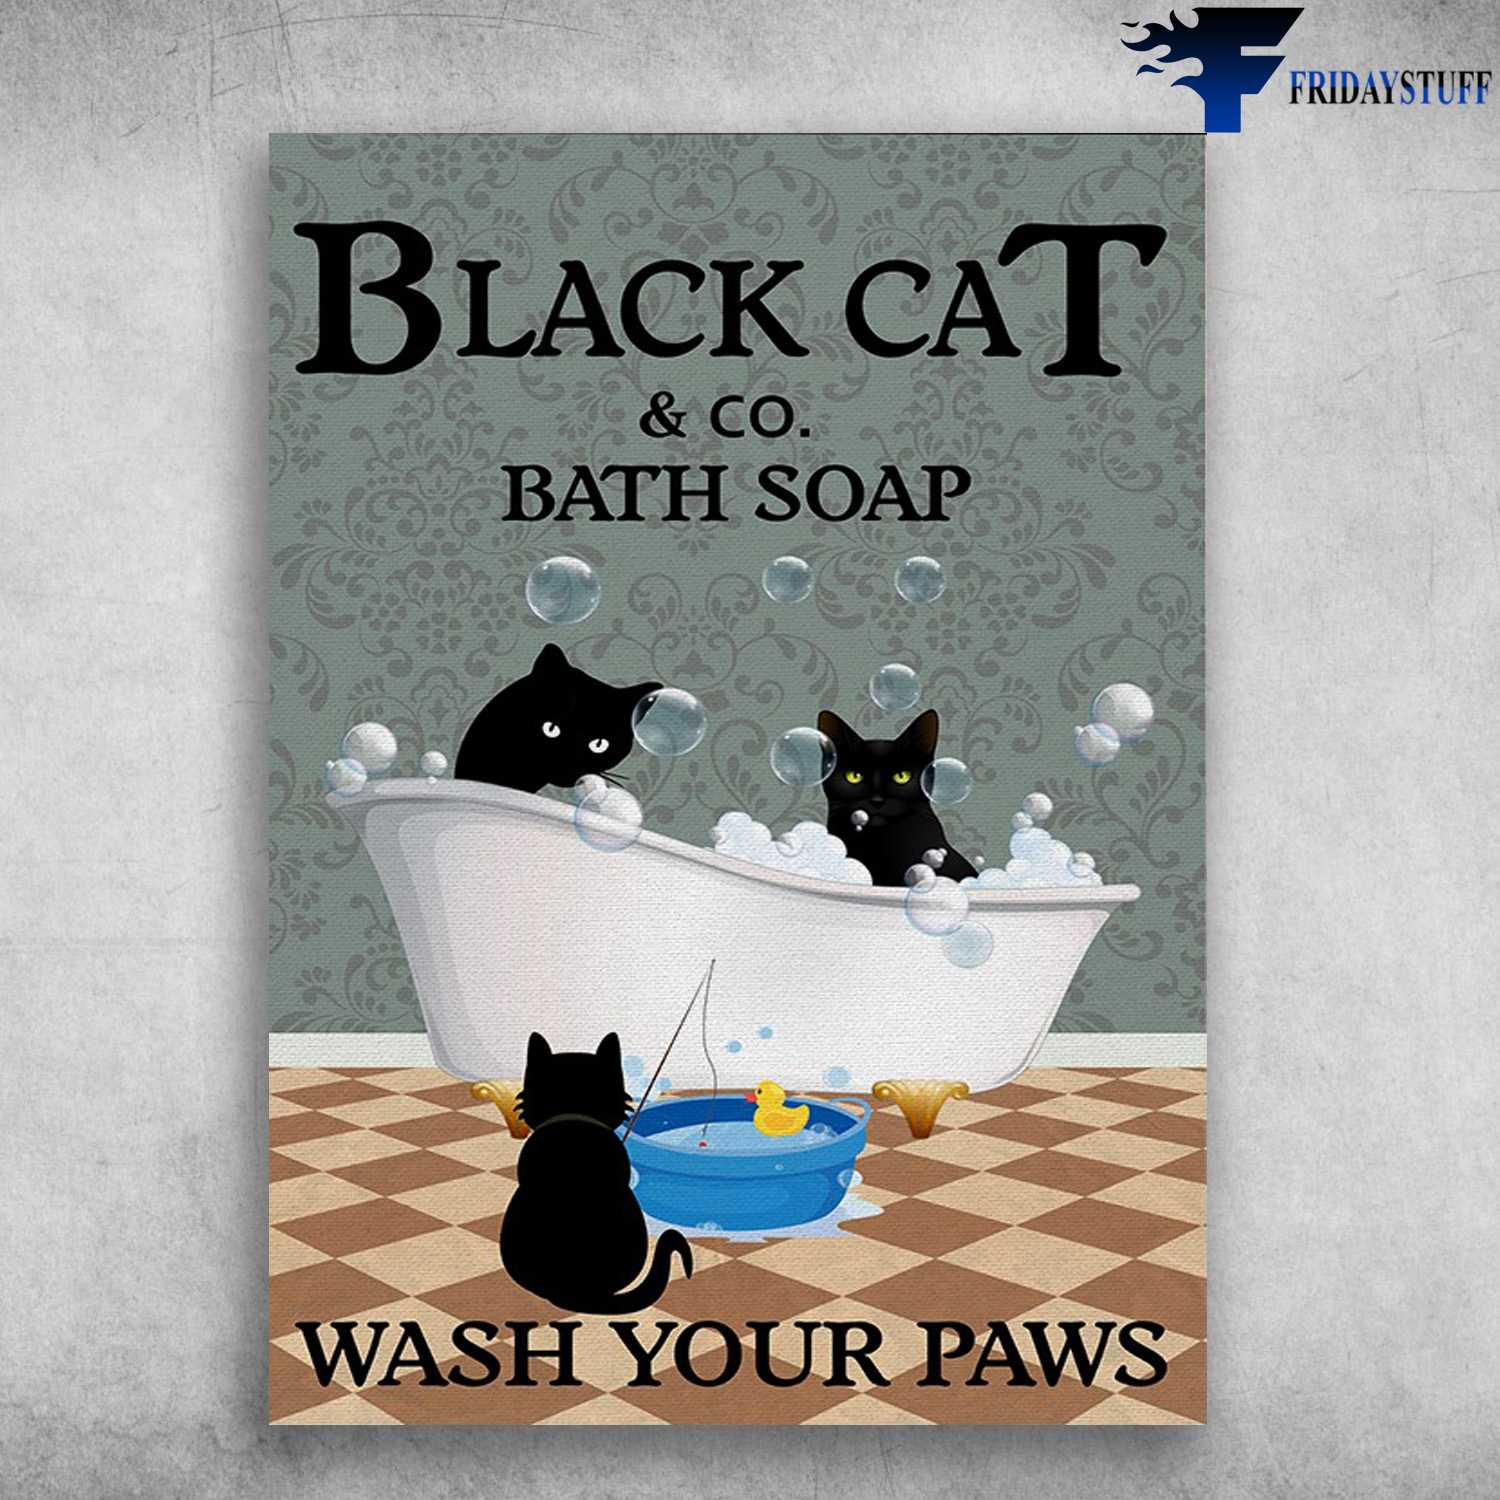 Black Cat Bath Soap - Black Cat And CO. Bath Soap, What Your Paws